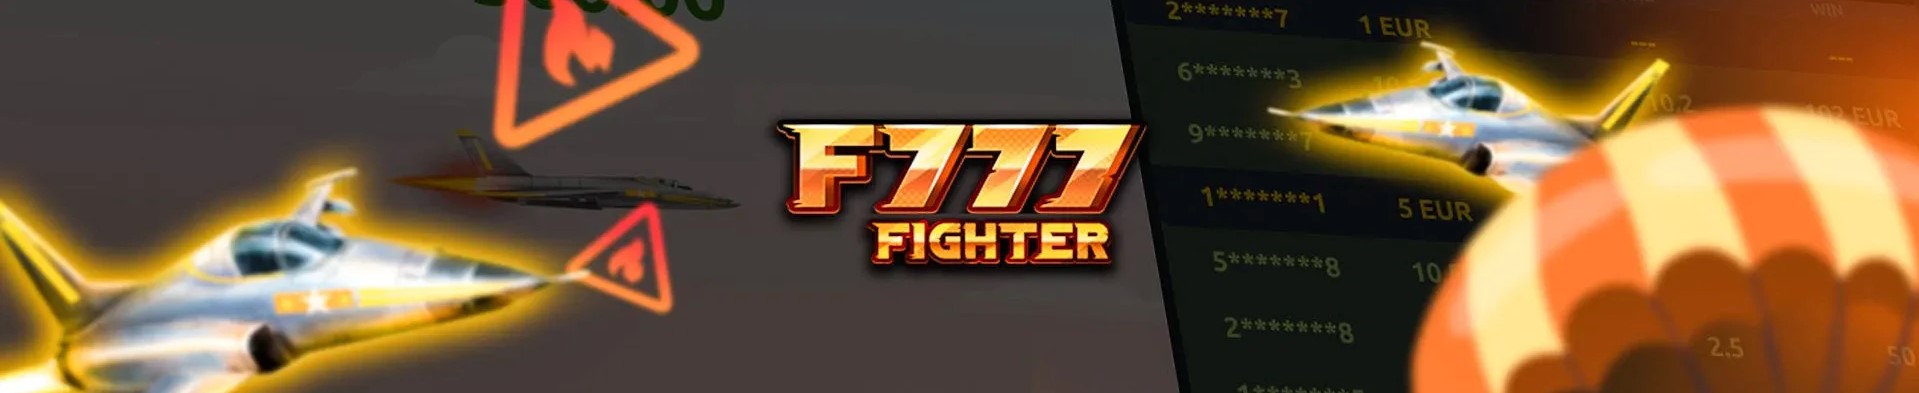 F777 fighter oyunu.